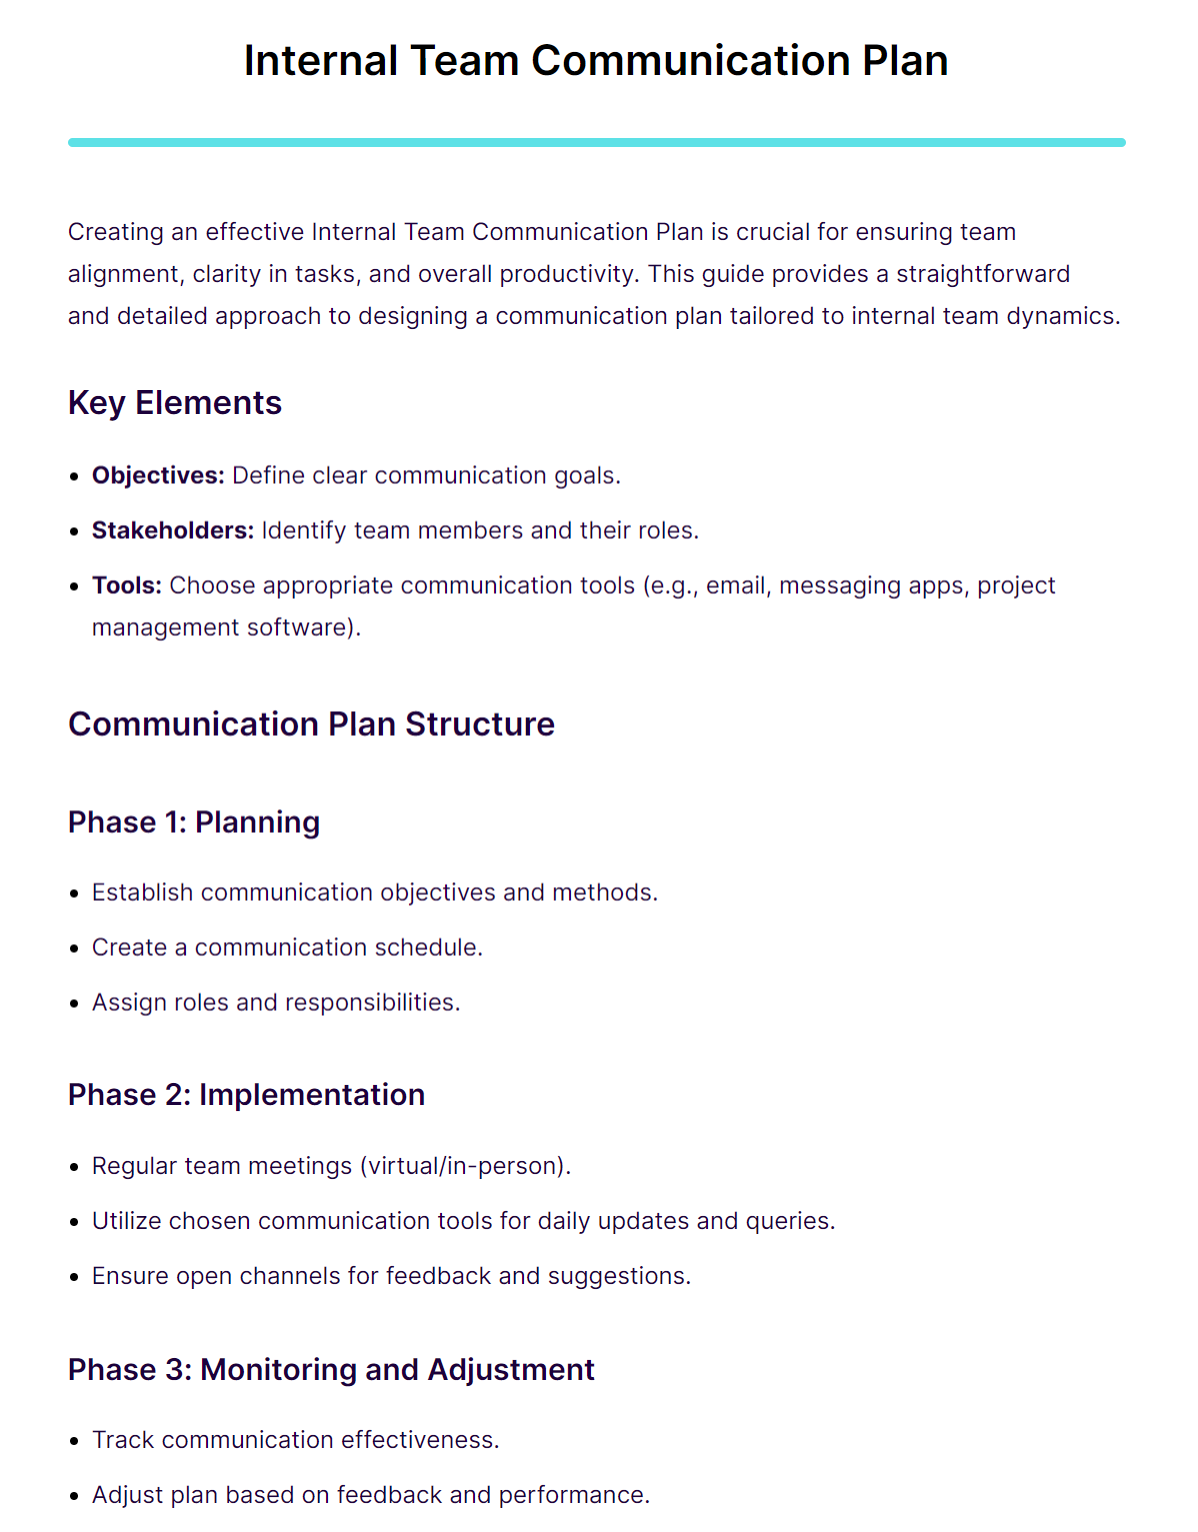 Internal-Team-Communication-Plan1